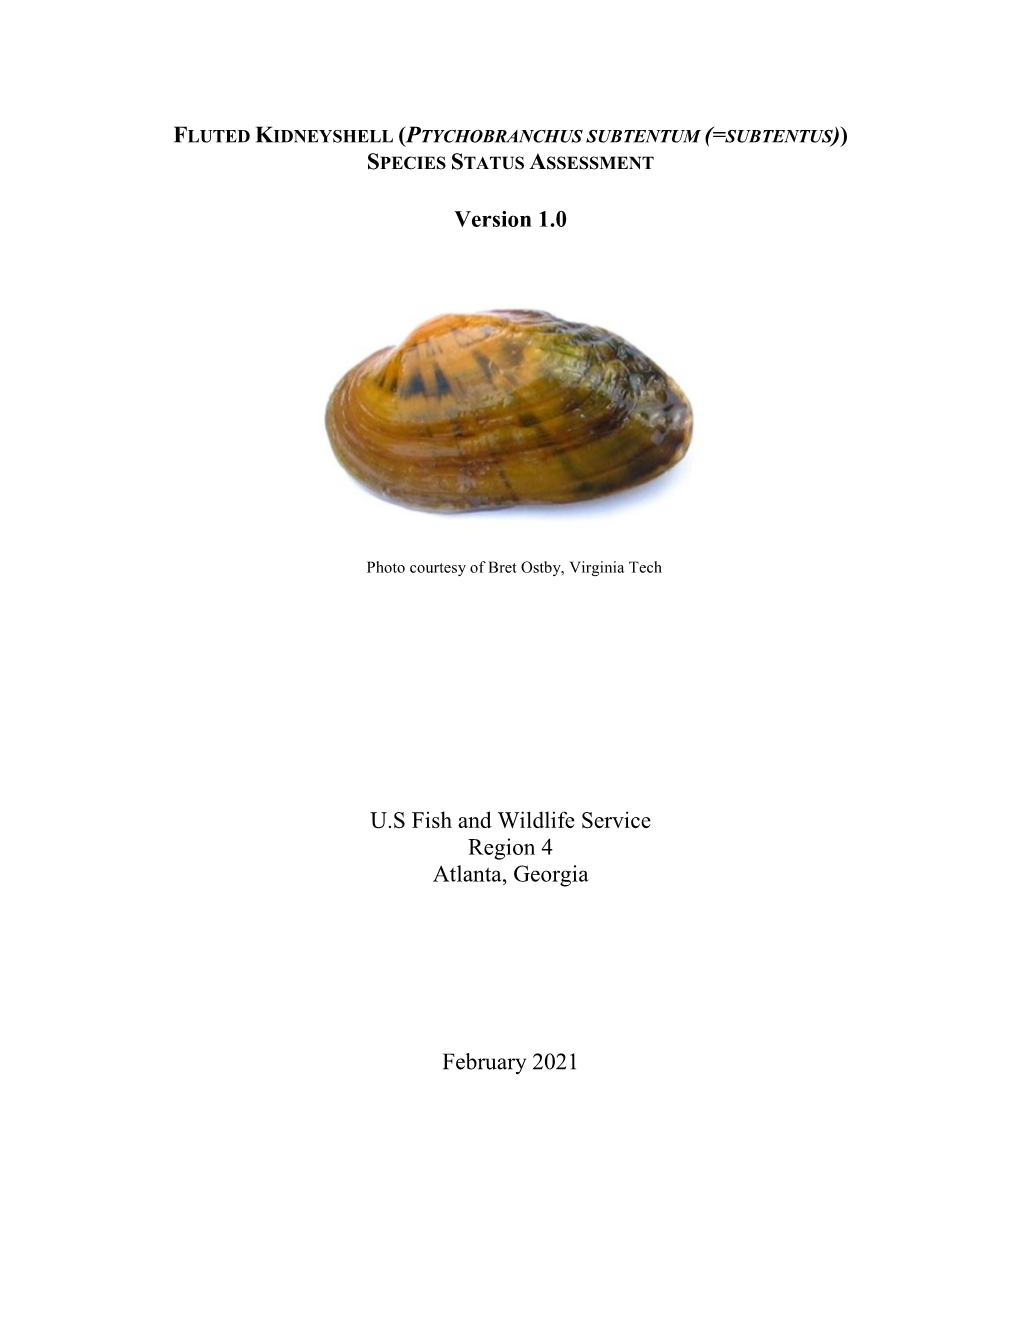 Species Status Assessment Report for the Fluted Kidneyshell (Ptychobranchus Subtentum (=Subtentus)), Version 1.0